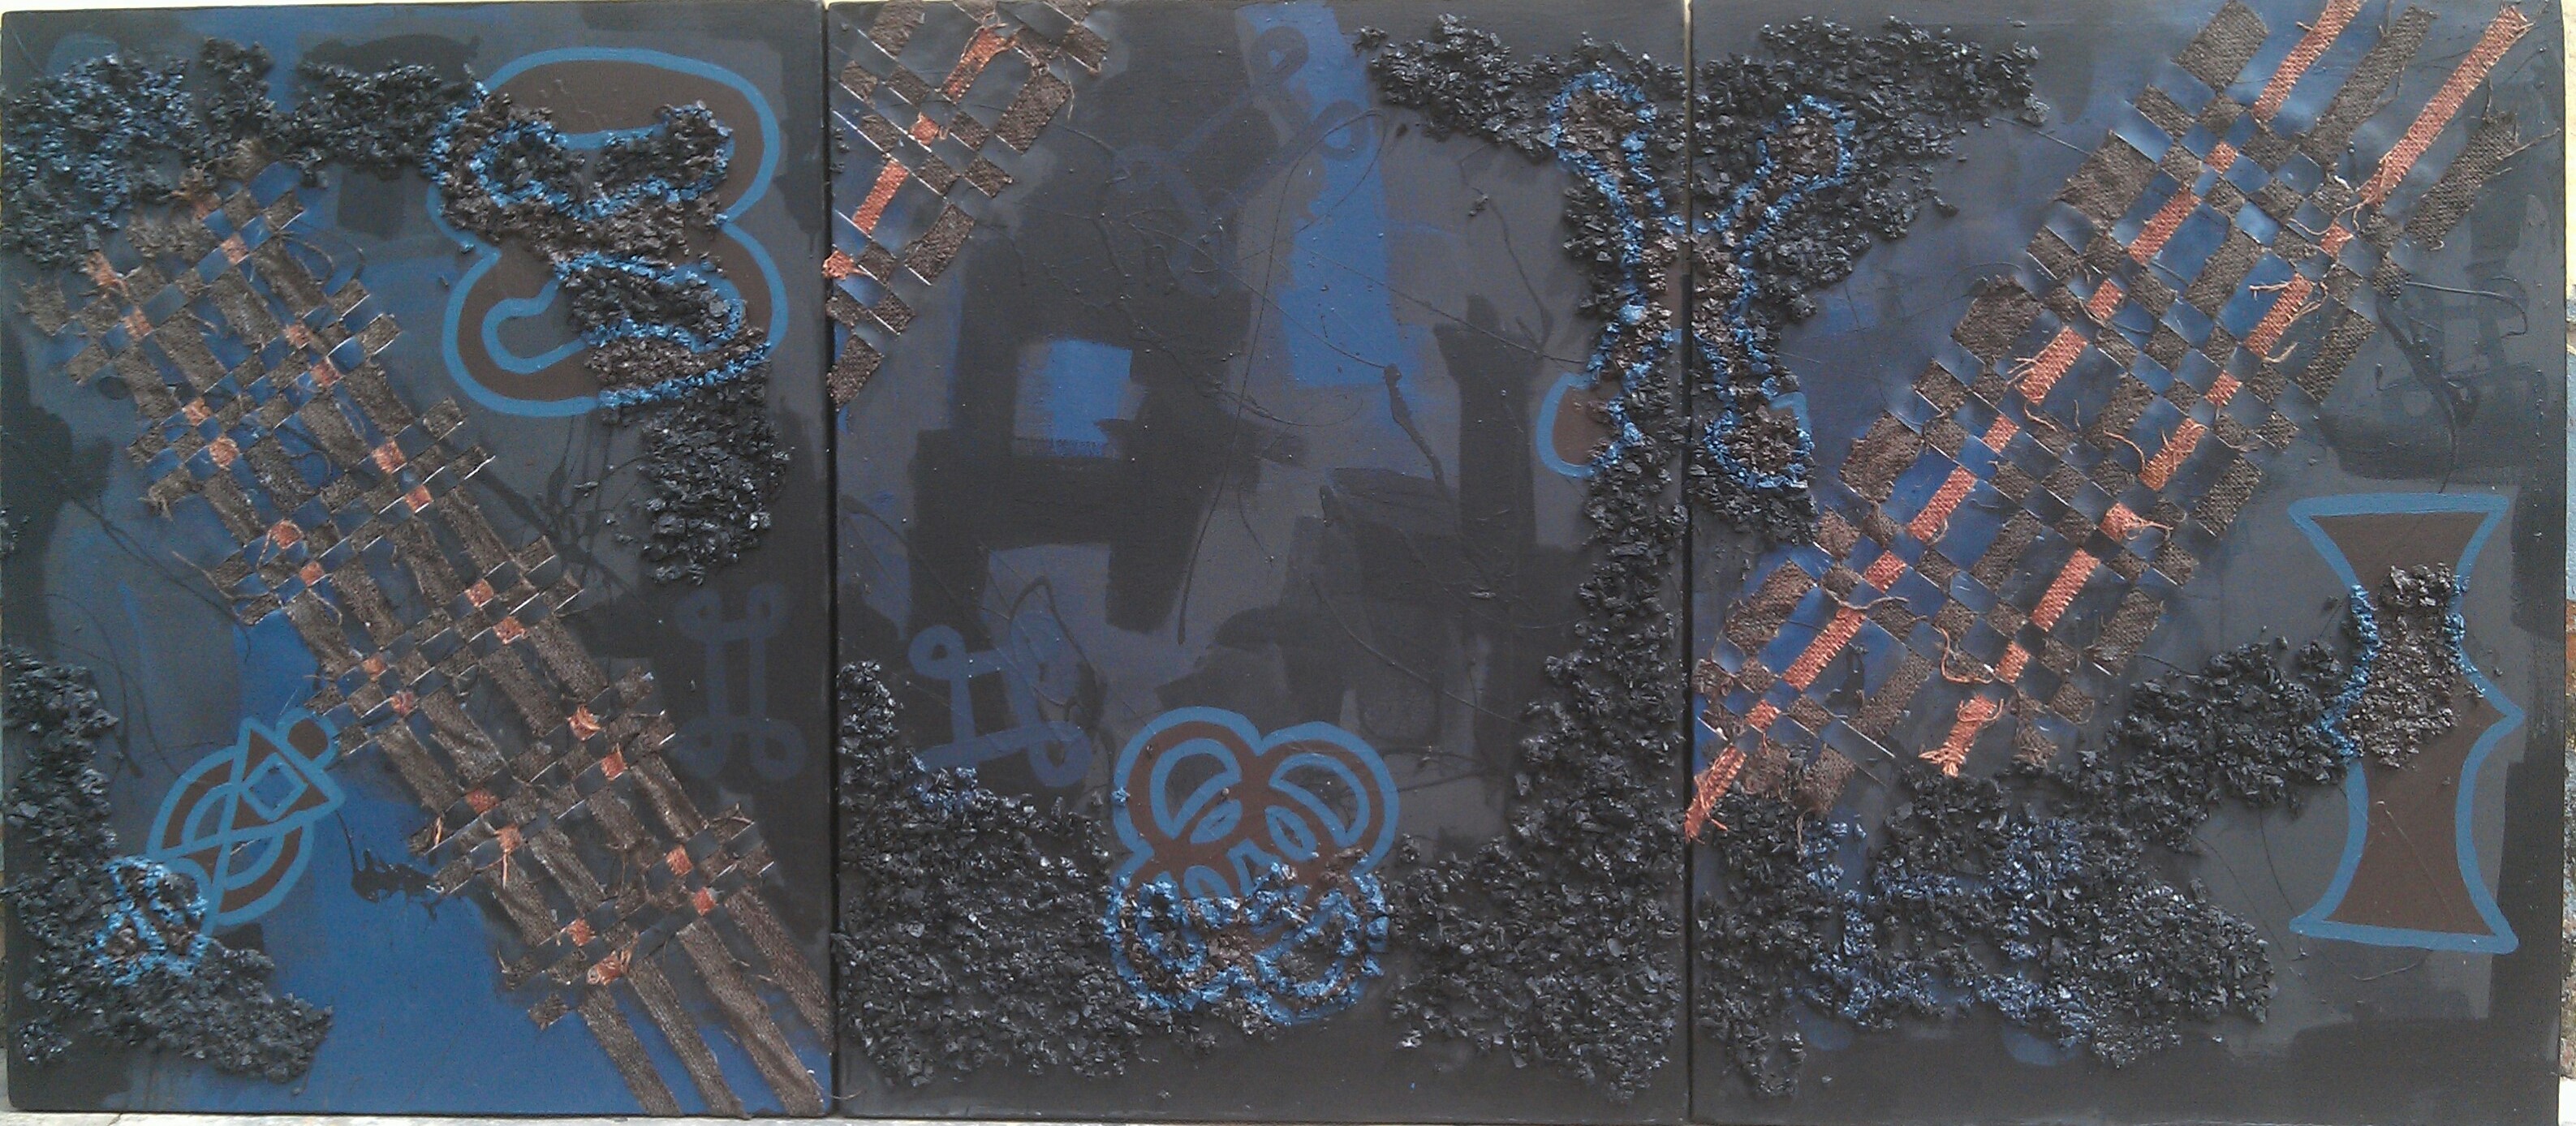 Boa men a me boa (series), 2018, jute sack, charcoal and acrylic on canvas, 101,6 x 228,6 cm